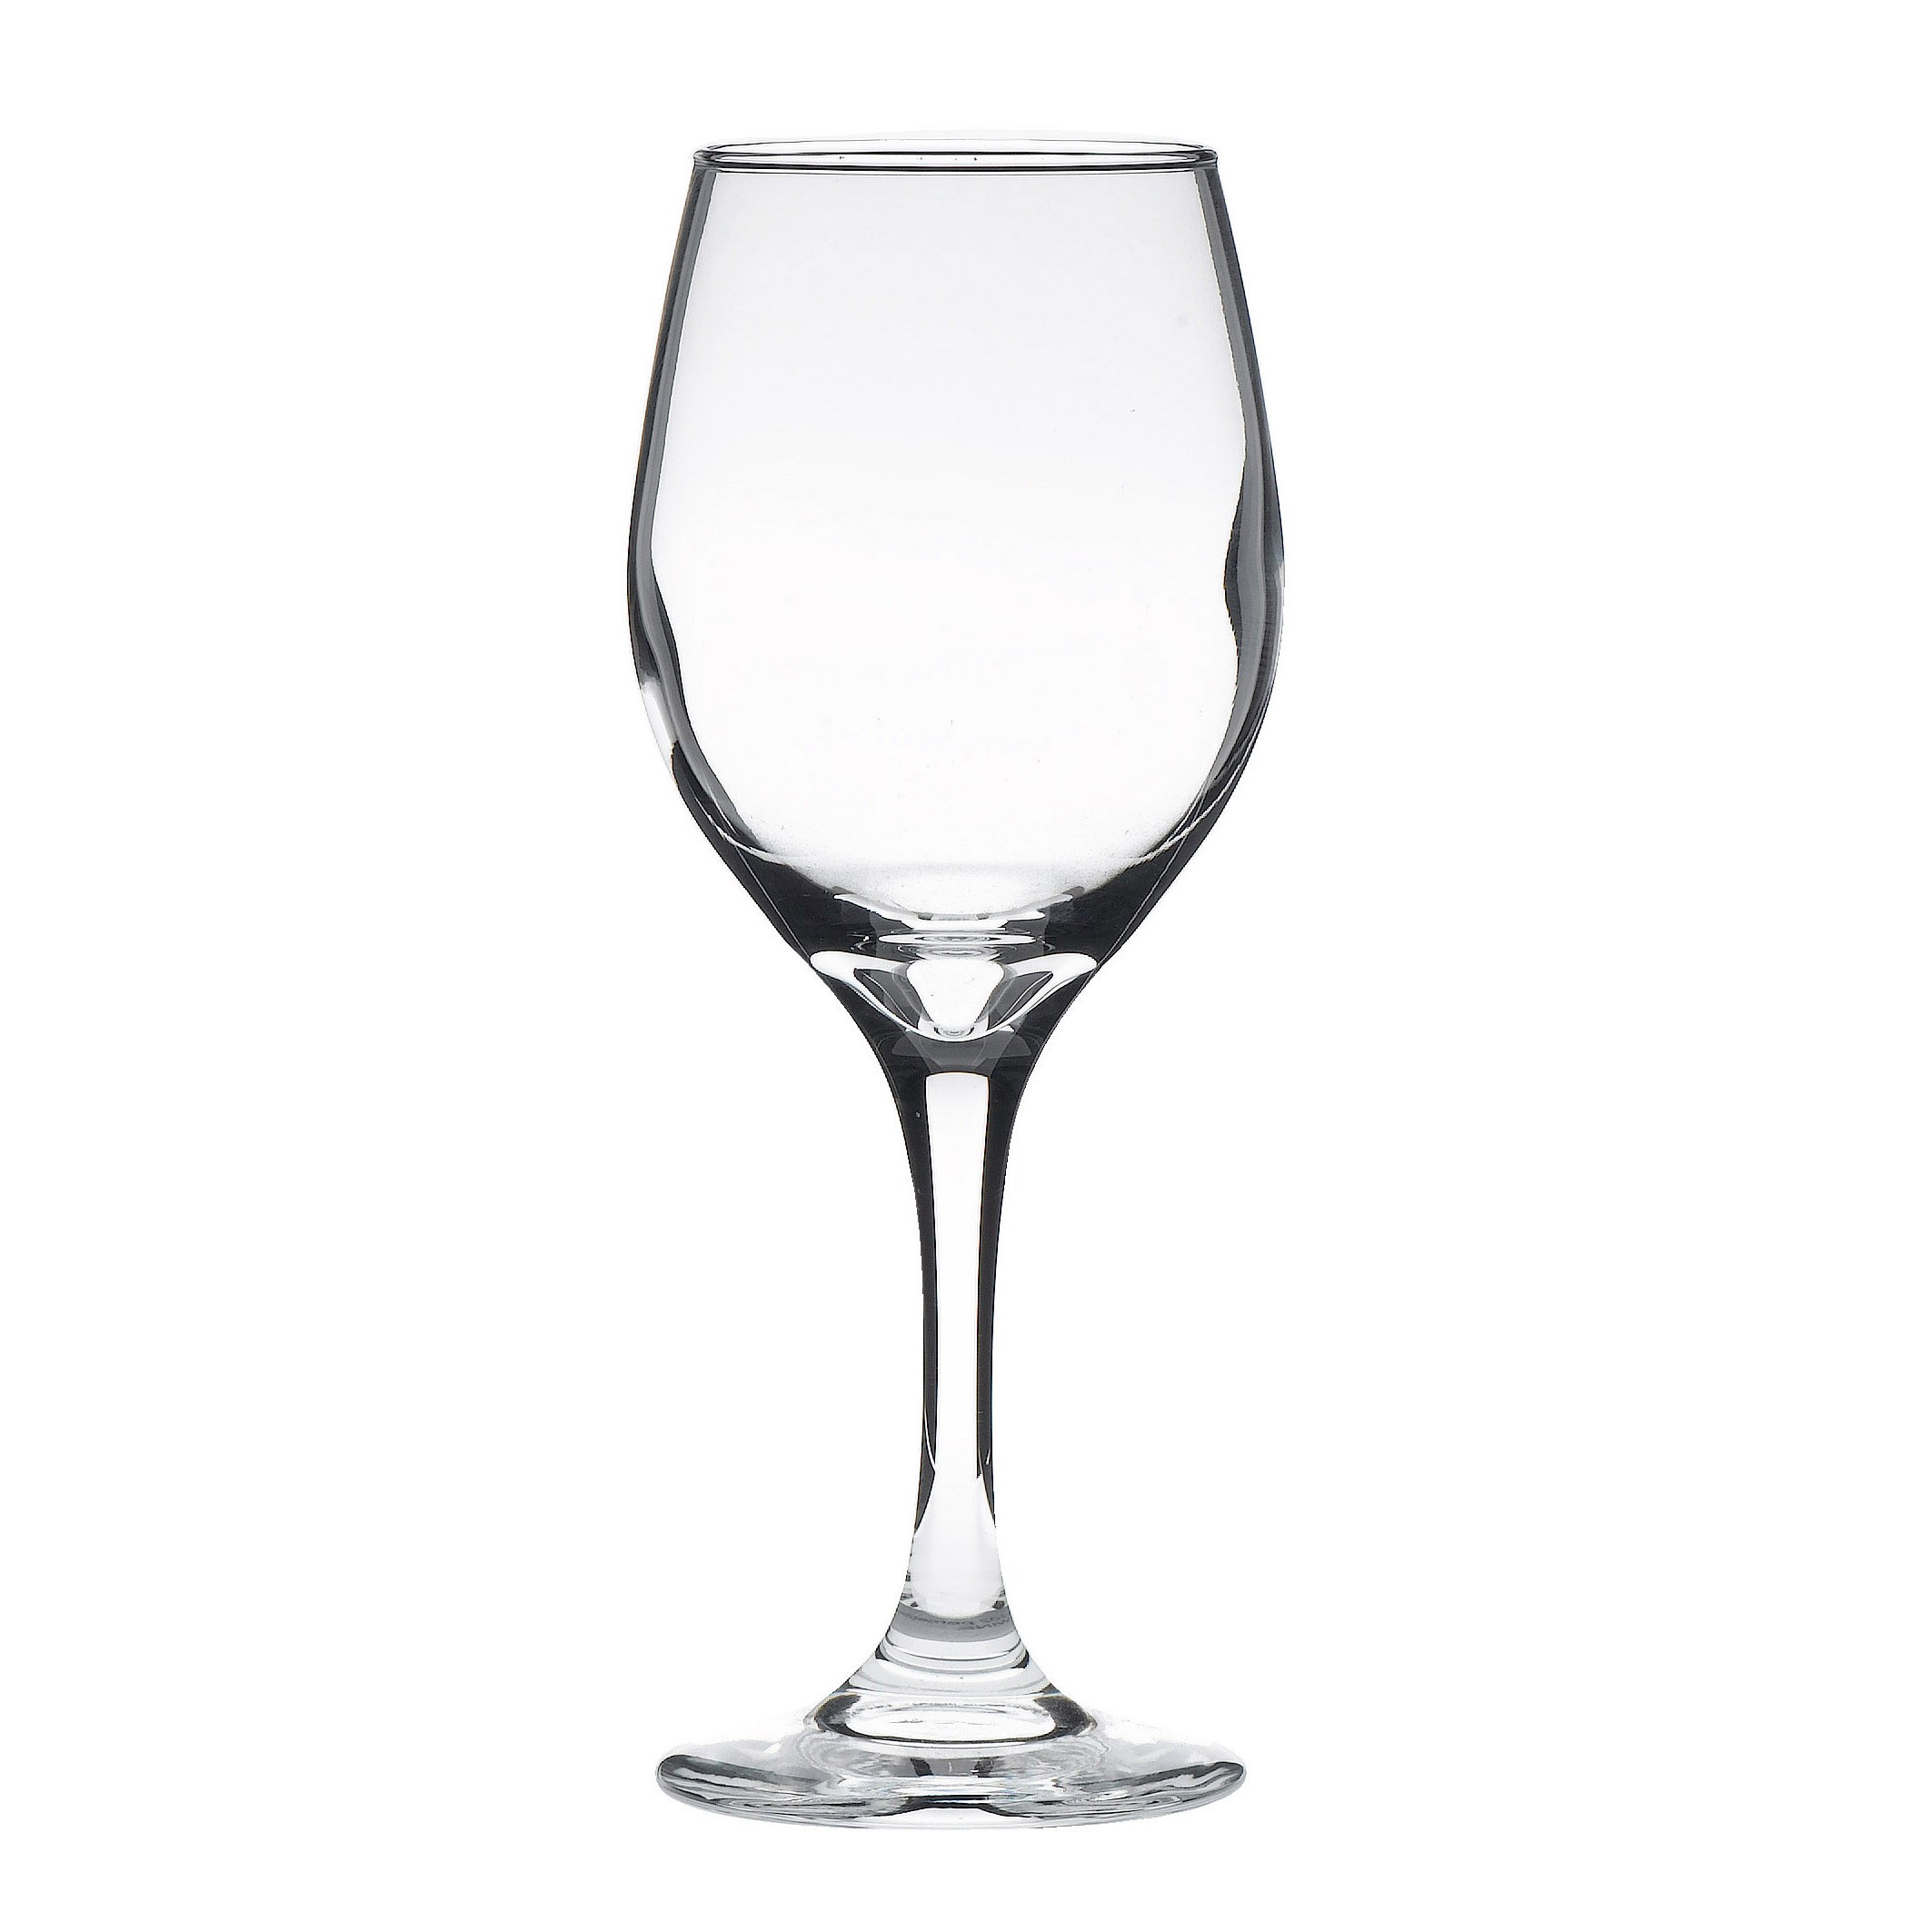 Perception Wine Glasses 11oz LCE at 250ml 